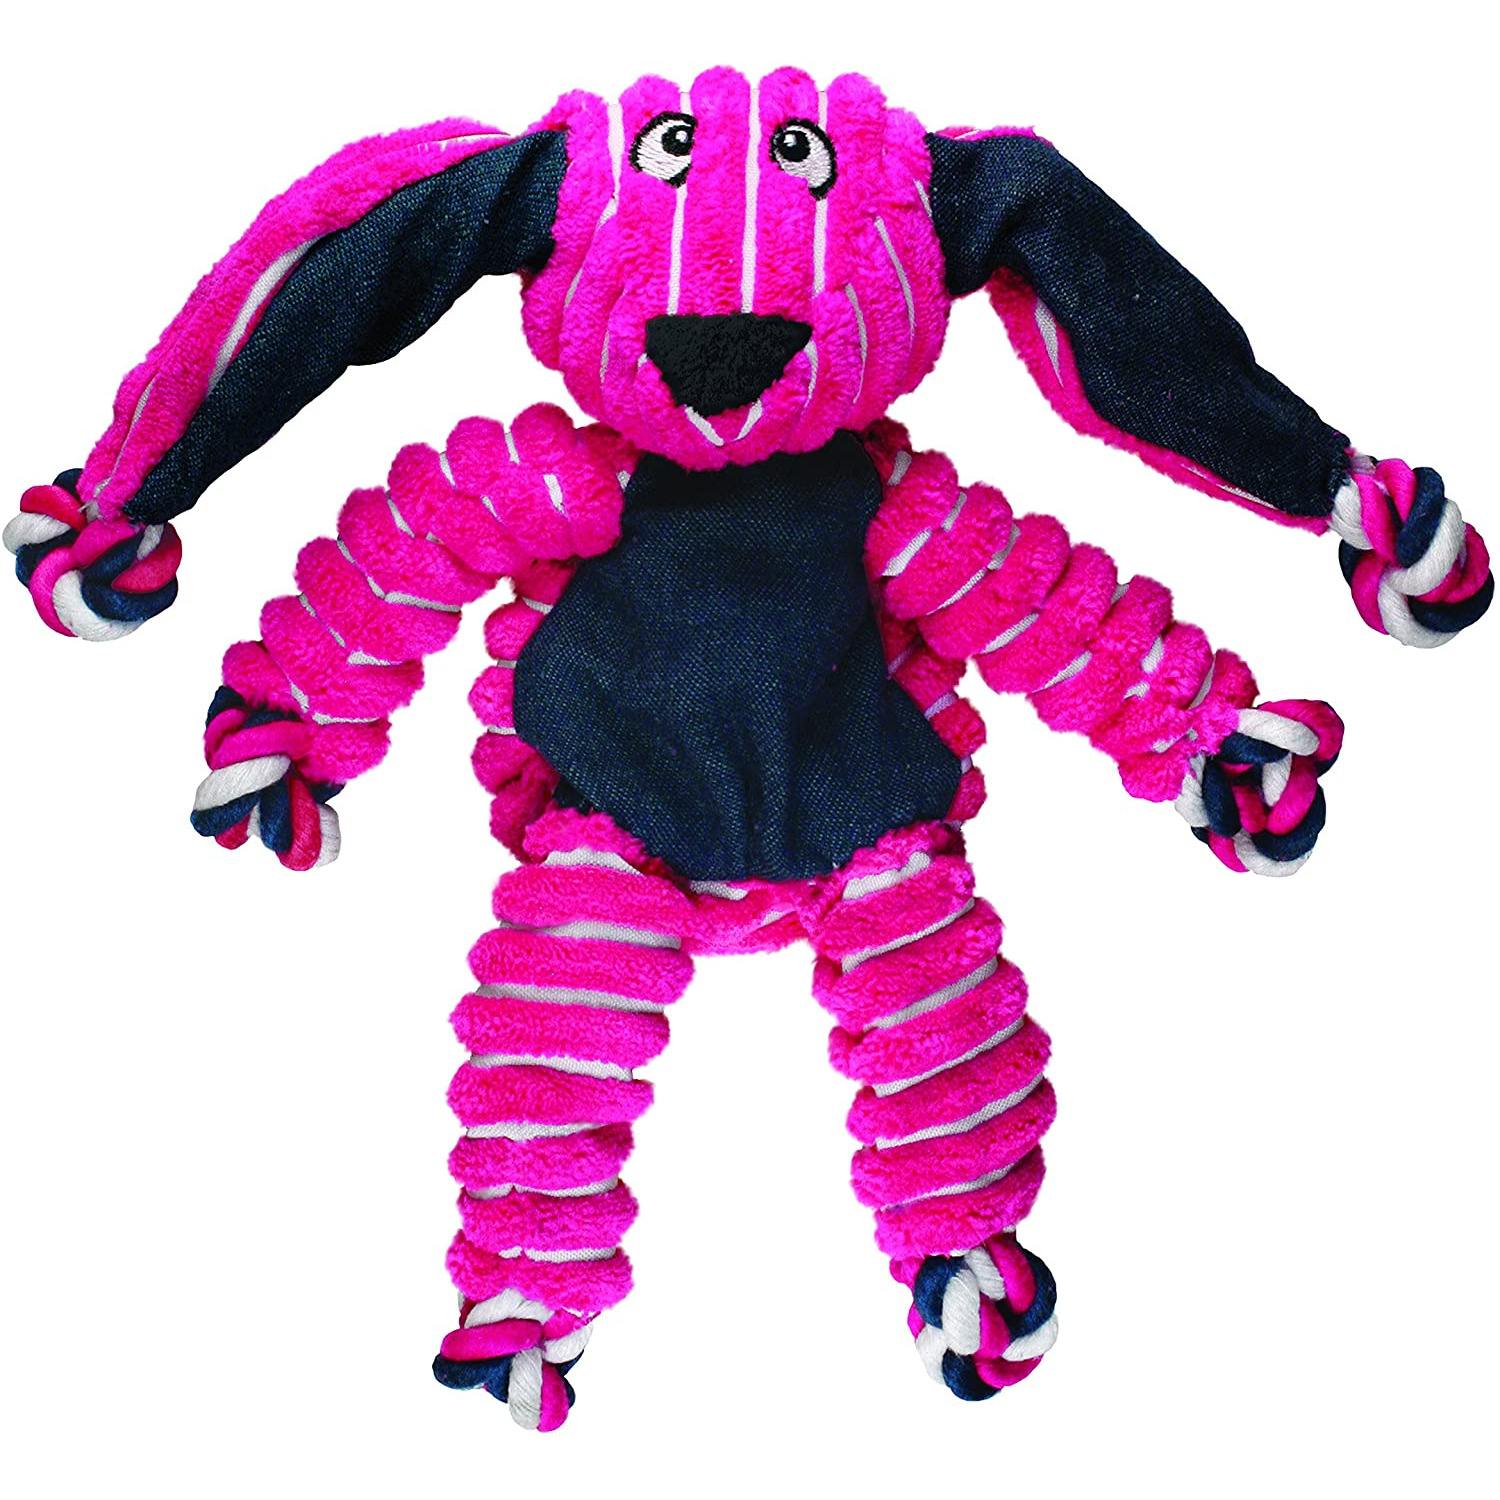 KONG Floppy Knots Plush Dog Toy